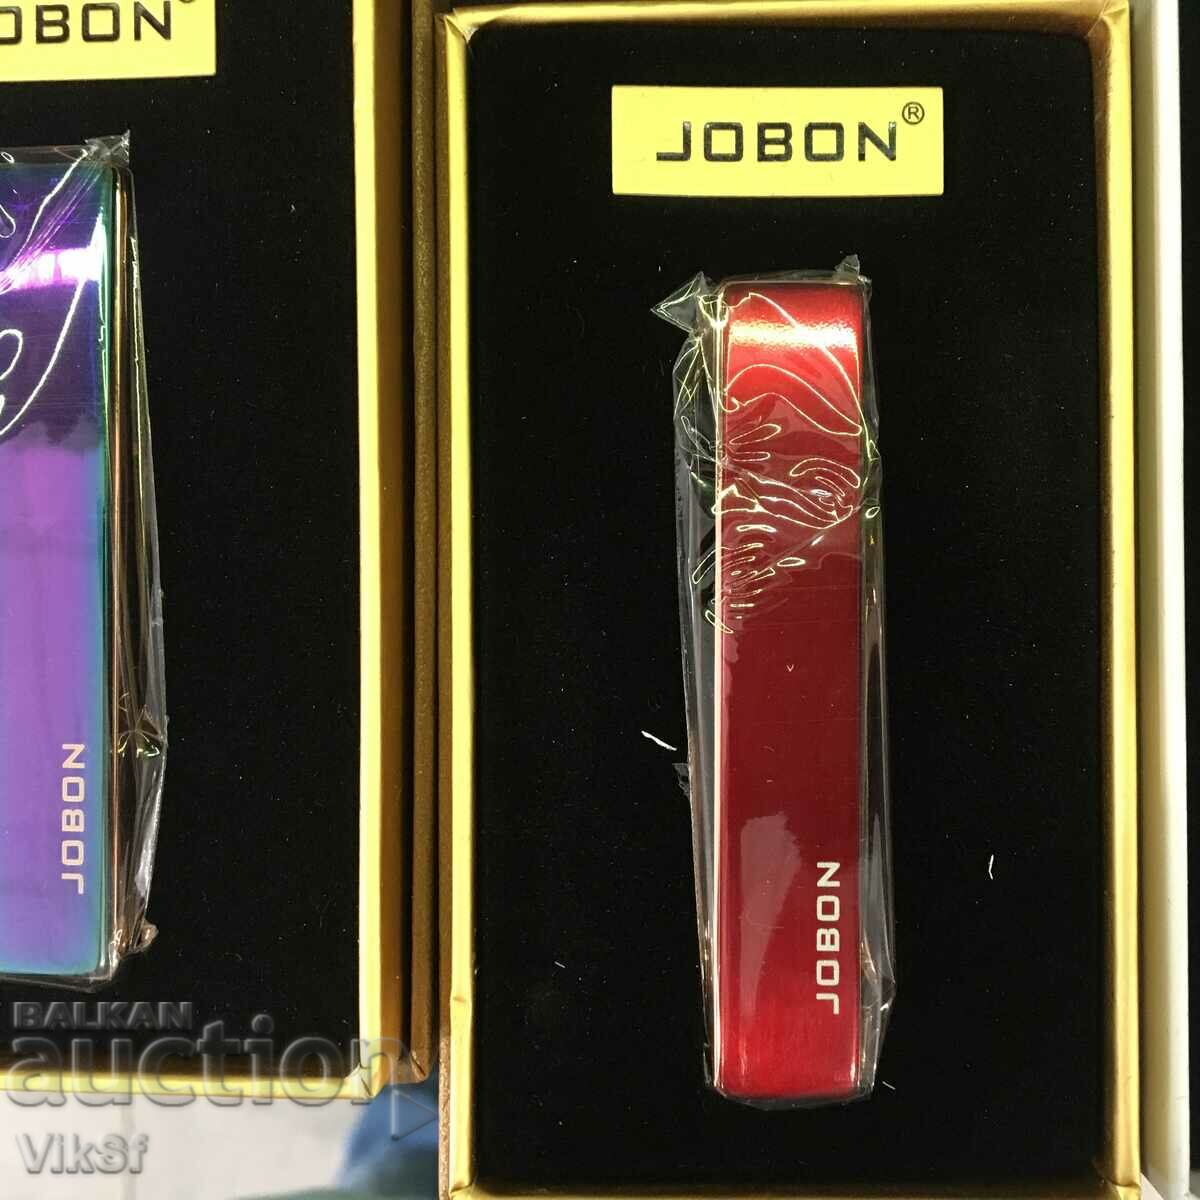 Fine, light and slim Jobon USB lighter